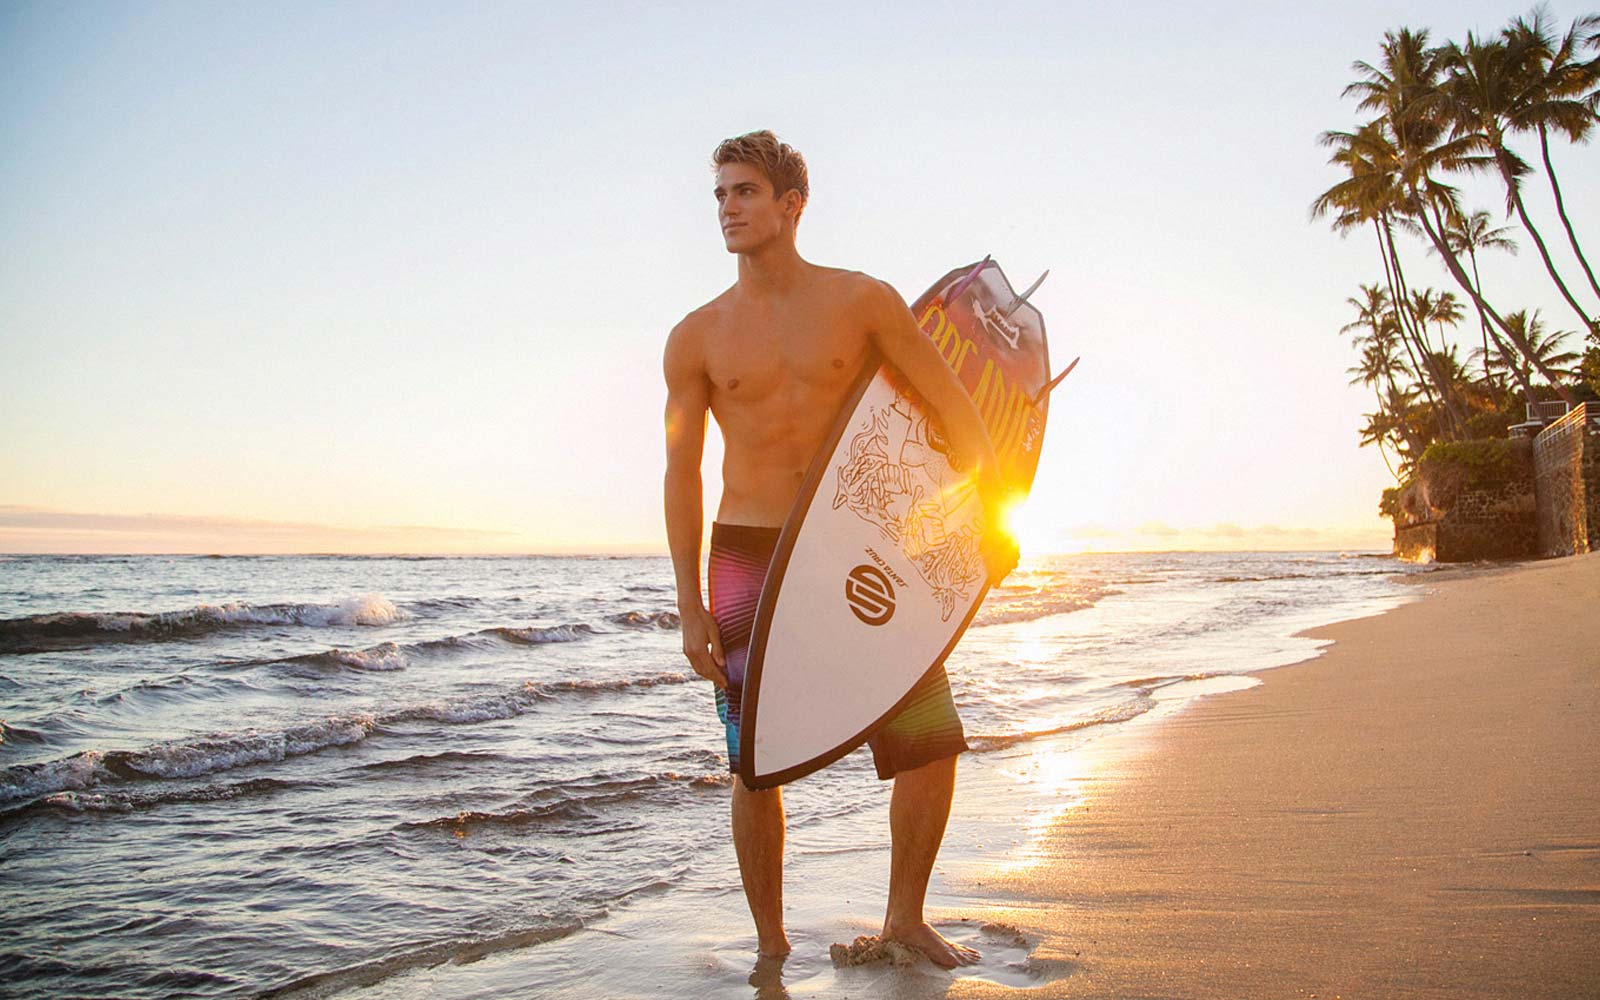 Man on beach holding surfboard